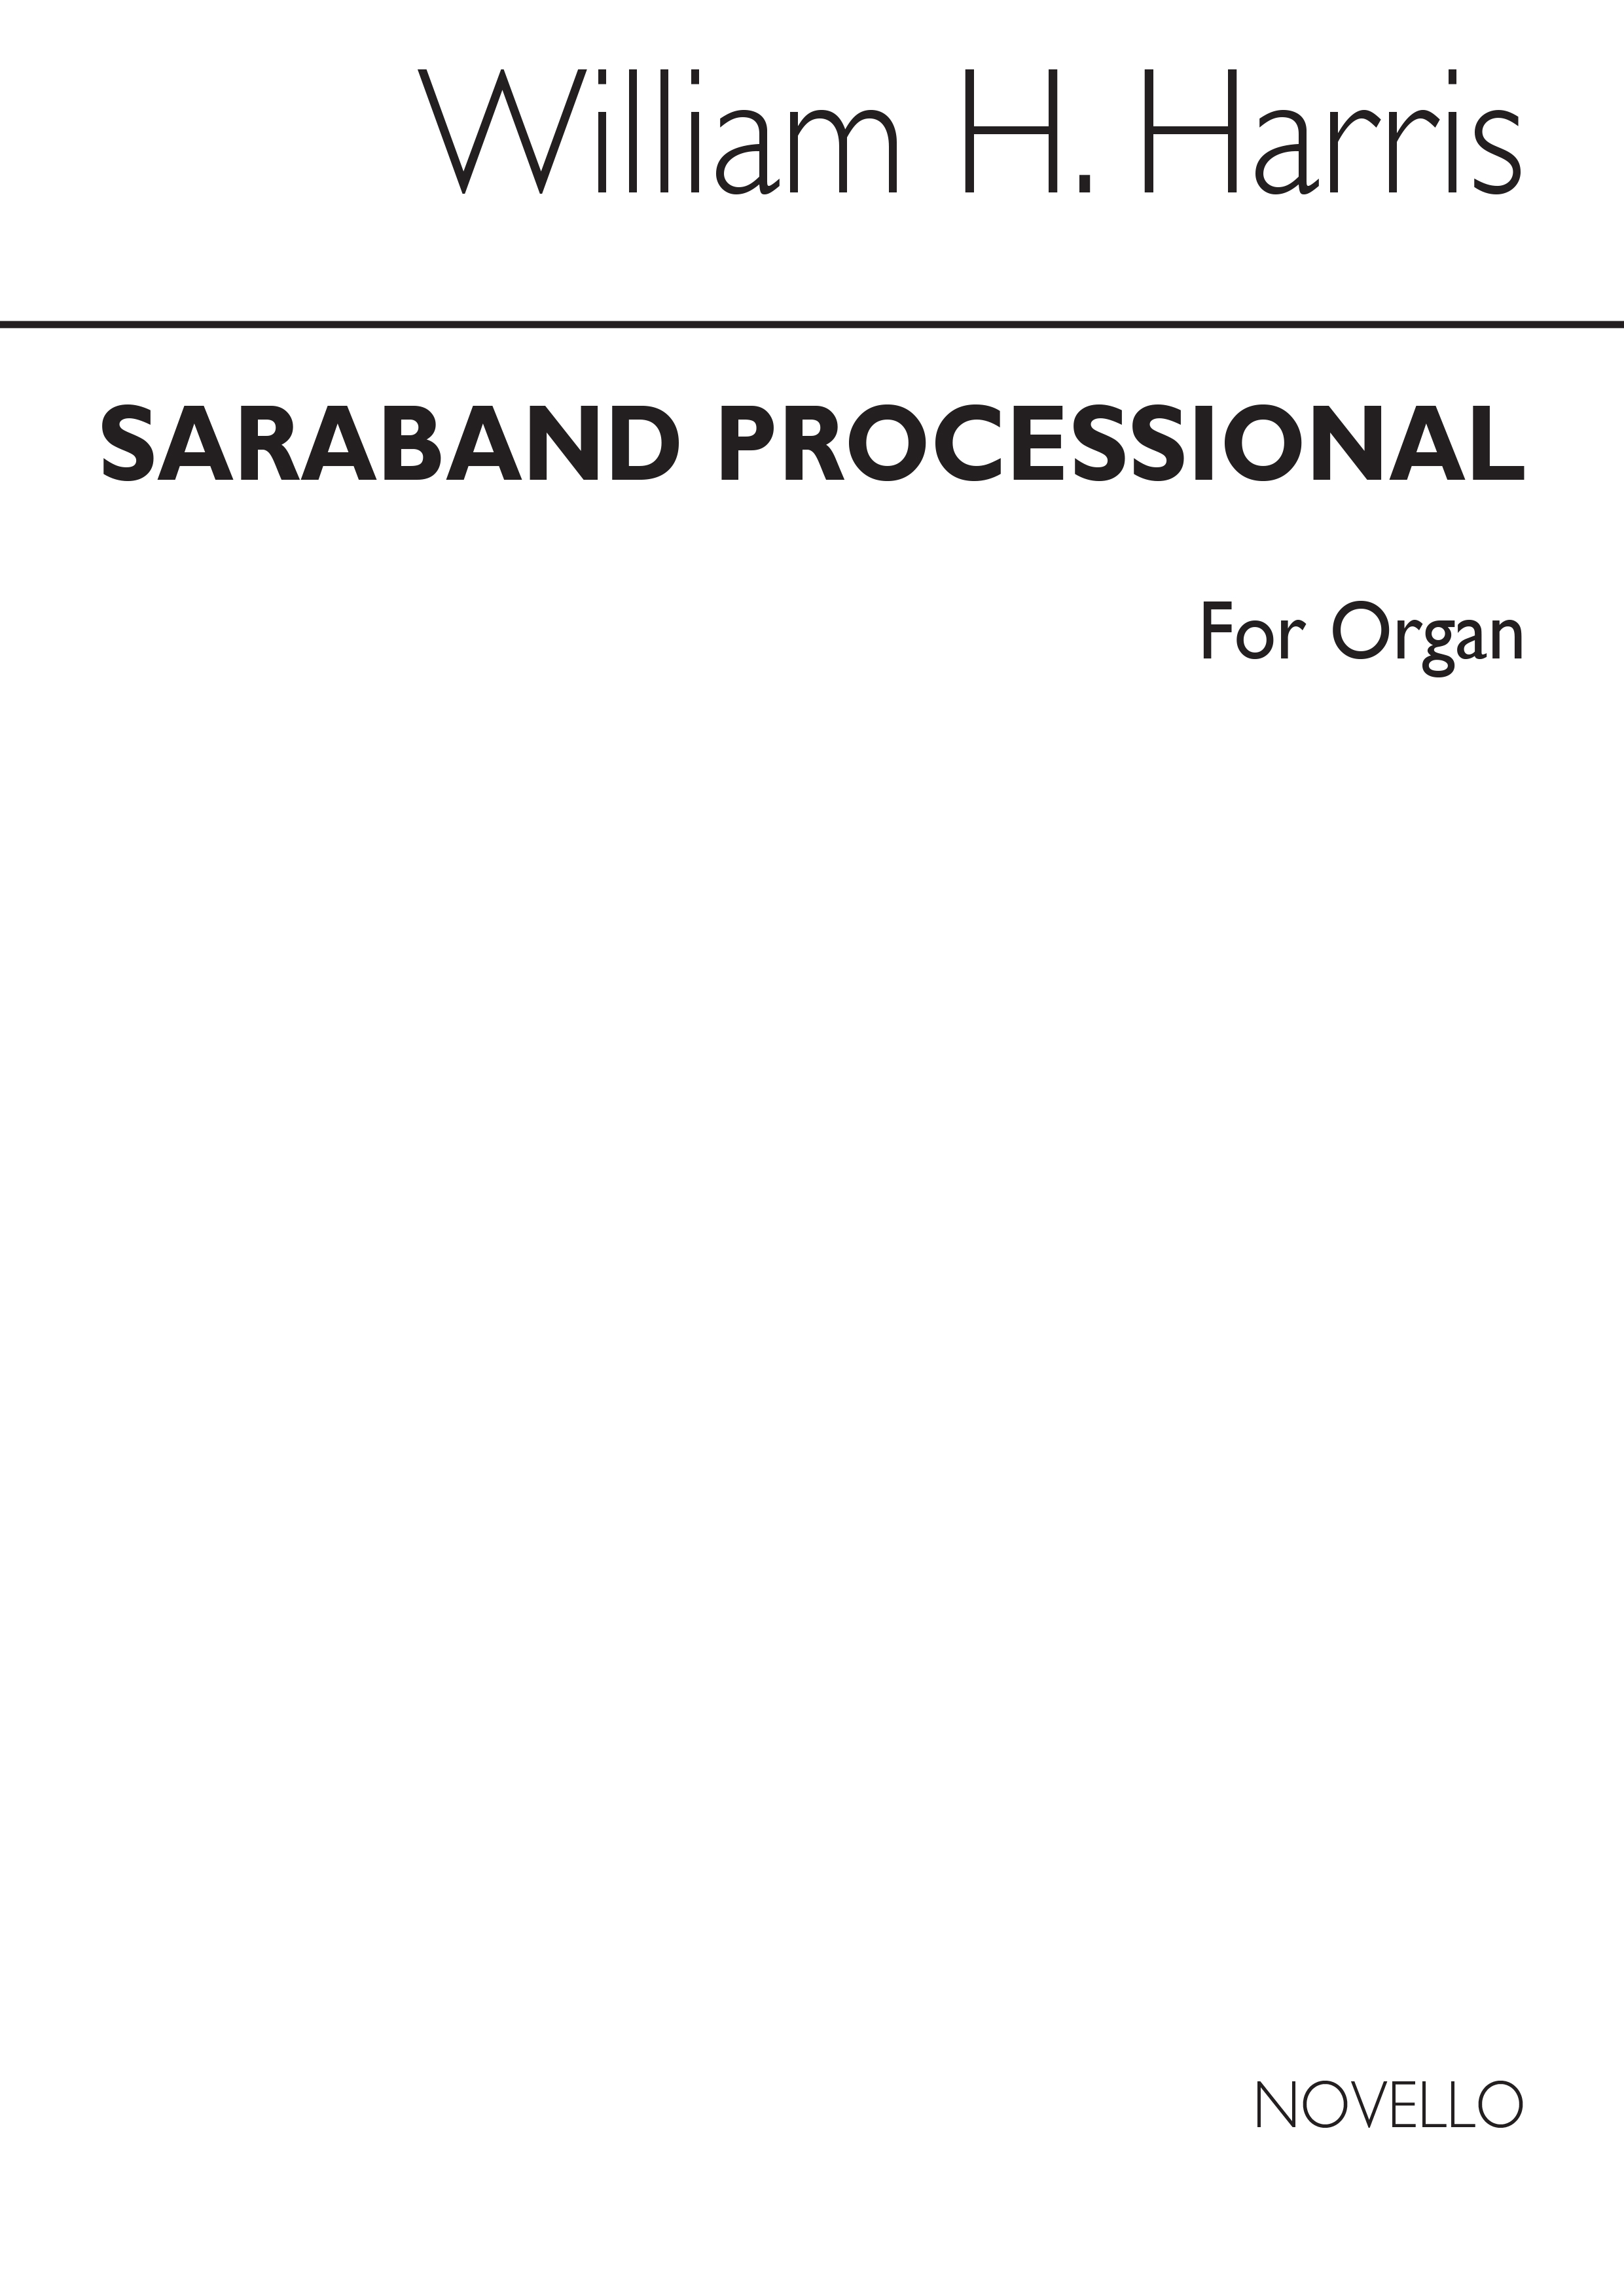 William H. Harris: Saraband Processional for Organ